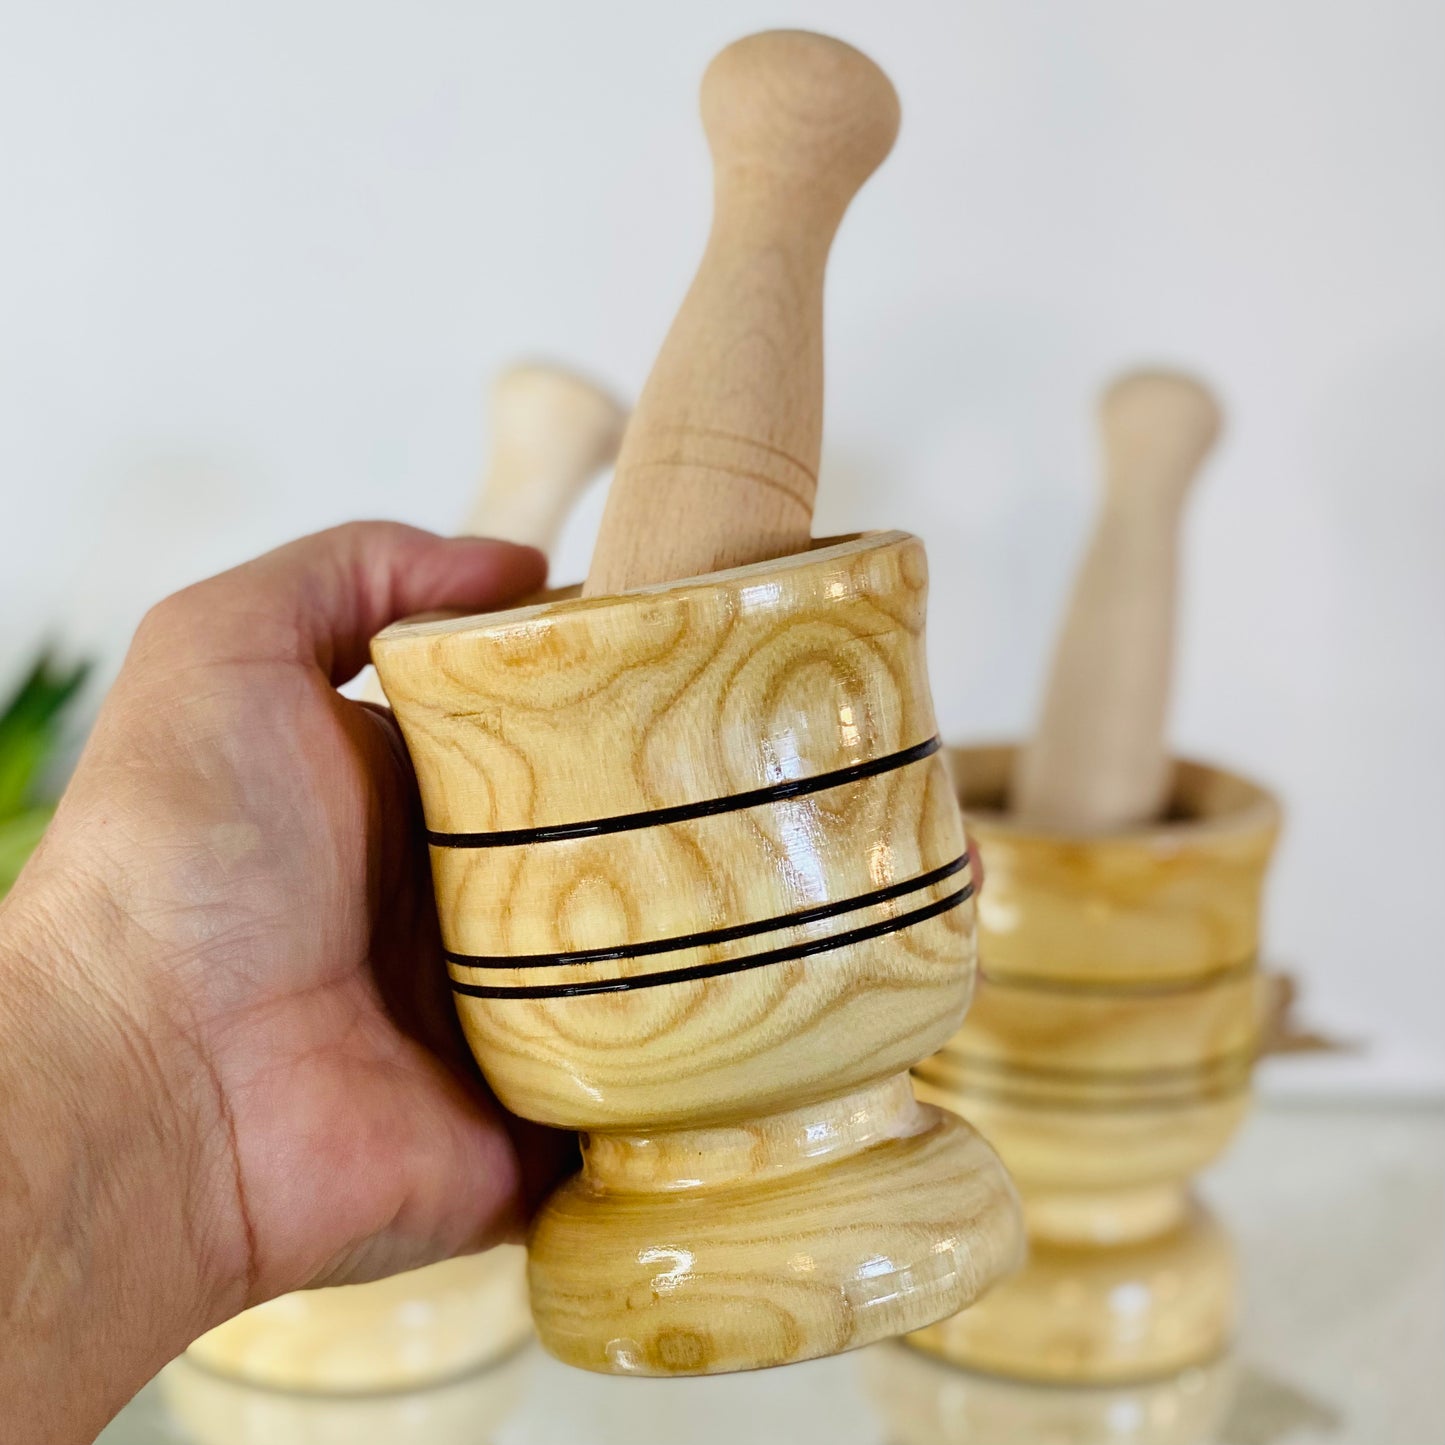 Artisan Crafted: Handmade Wooden Mortar & Pestle from Turkey